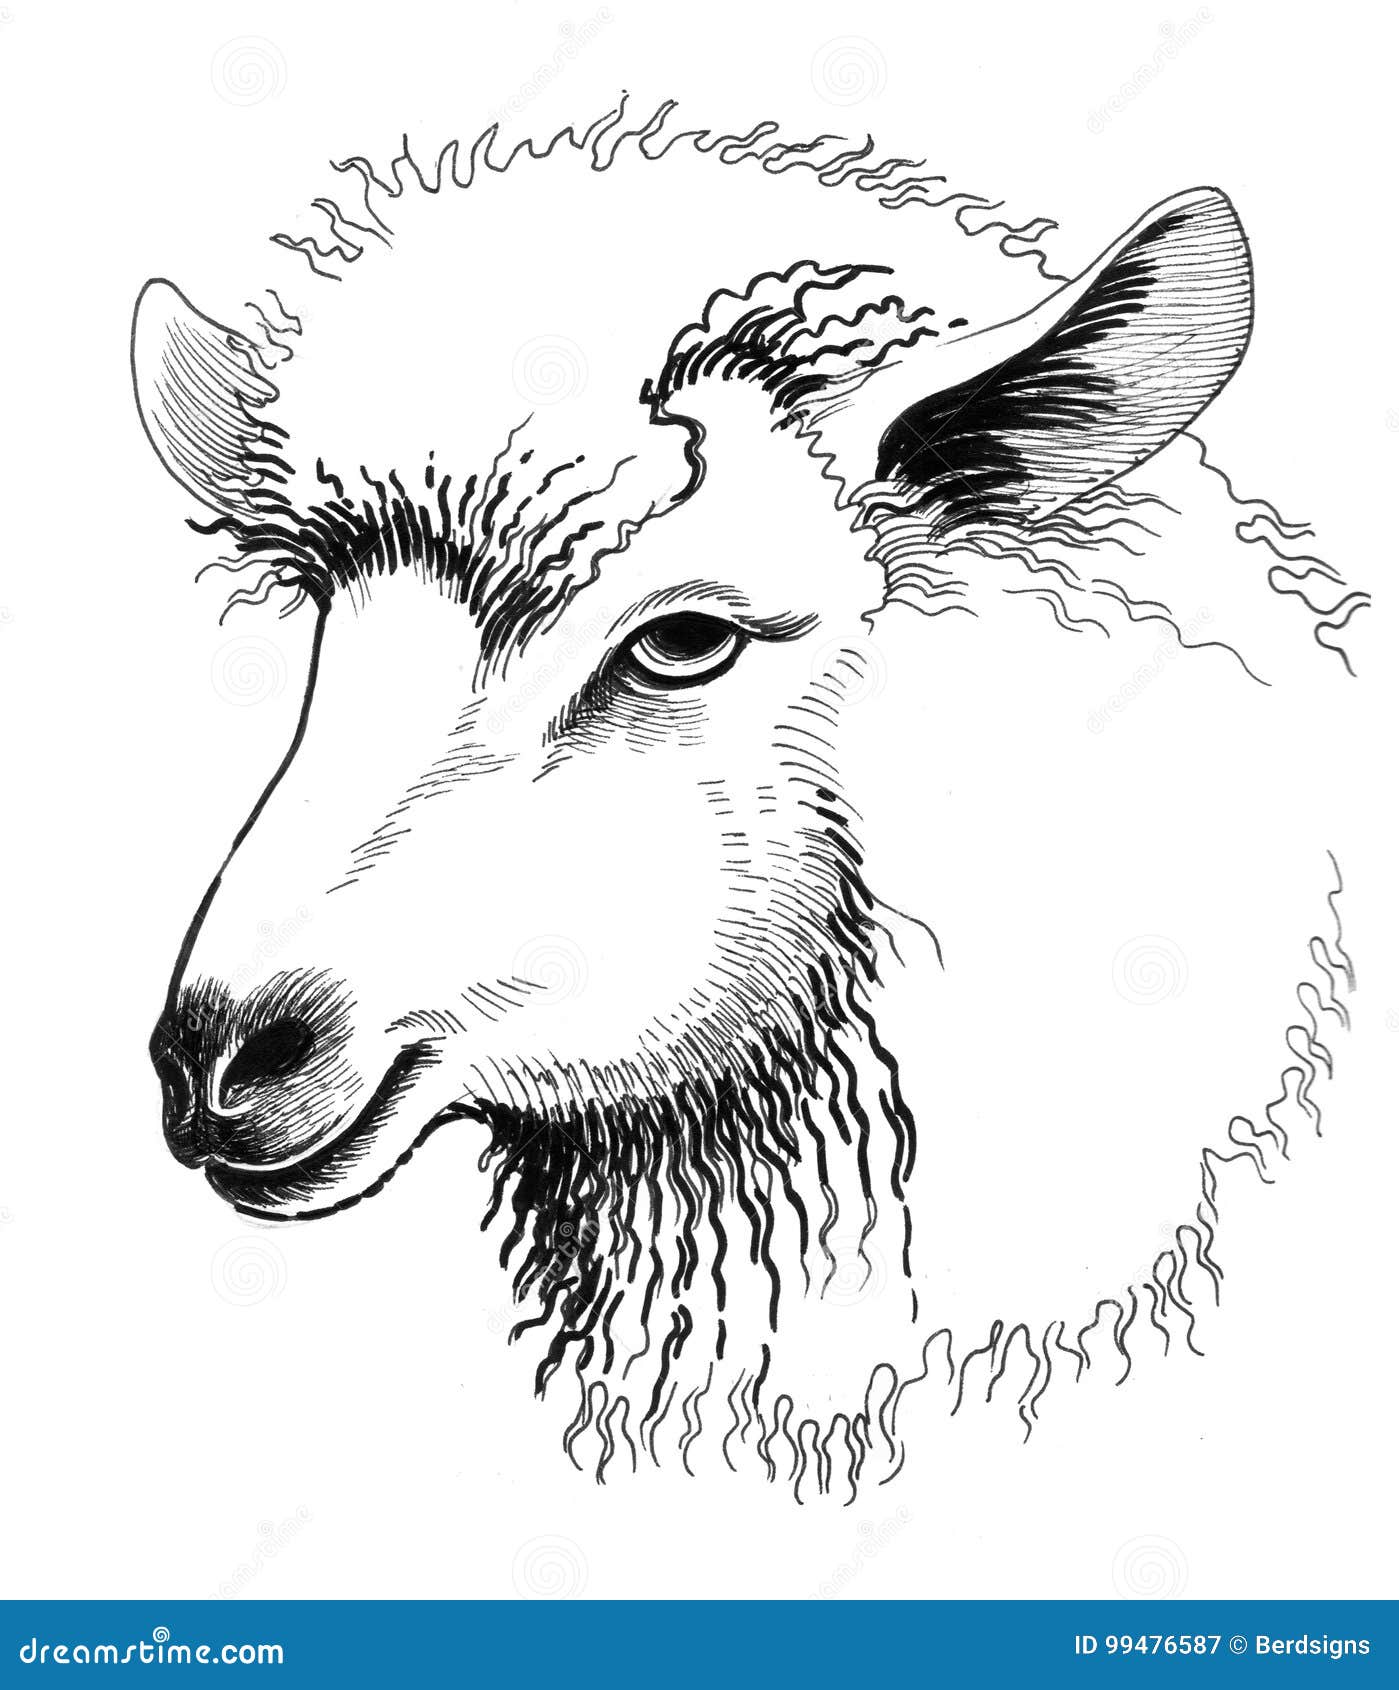 Sheep head stock illustration. Illustration of black